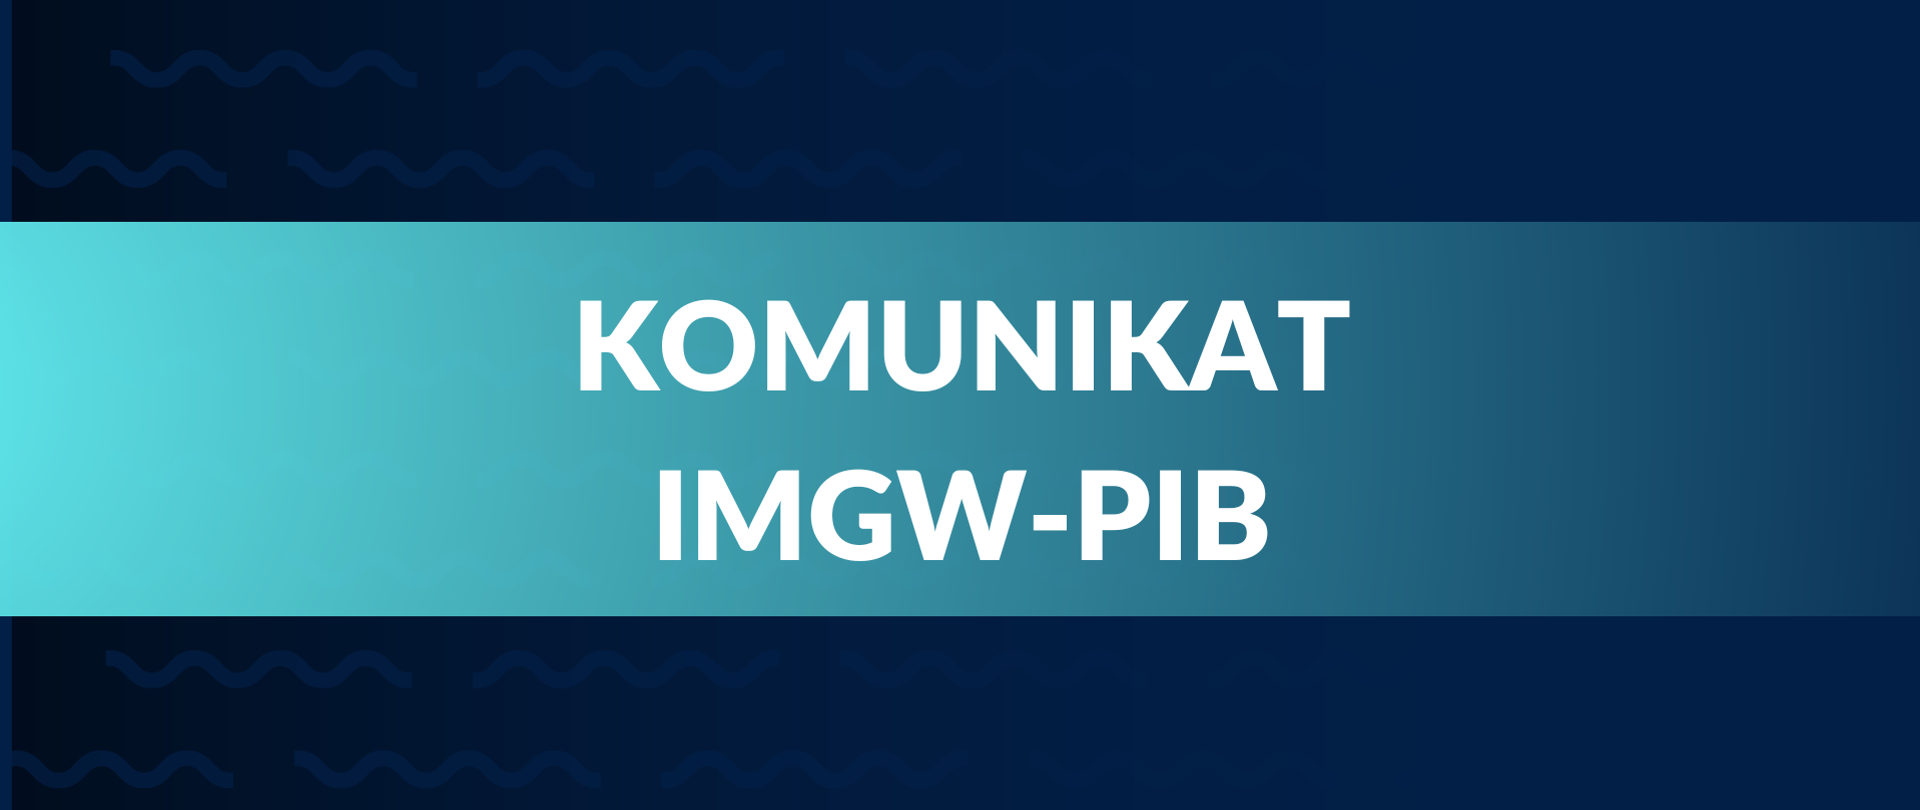 Komunikat IMGW-PIB